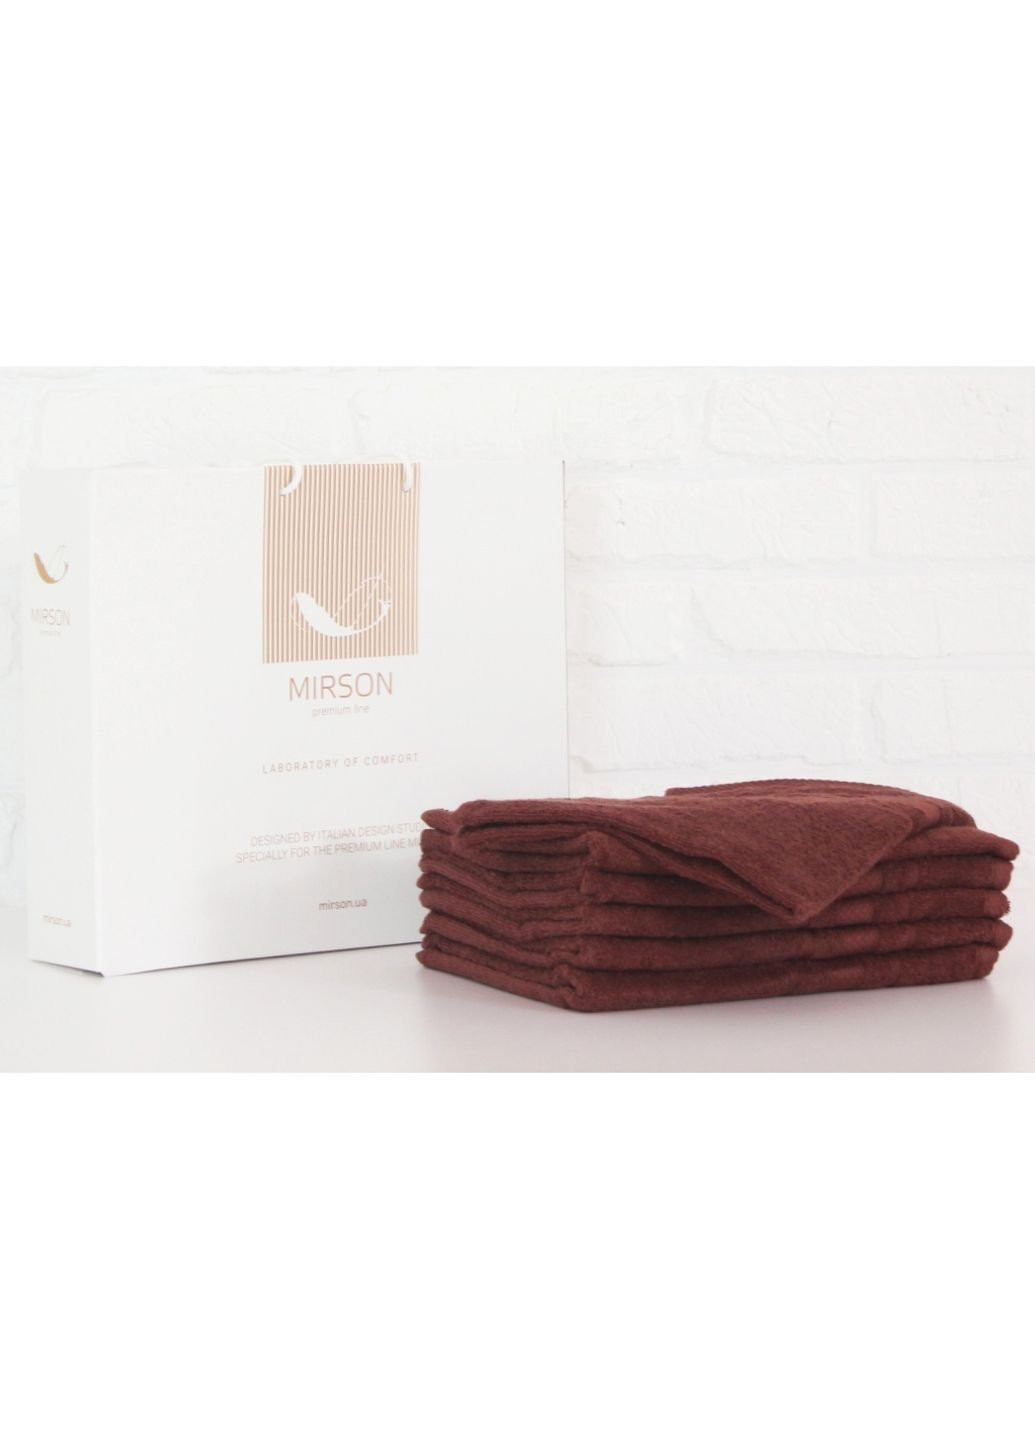 Mirson полотенце набор банный №5071 elite softness brown 70х140 6 шт (2200003524116) коричневый производство - Украина